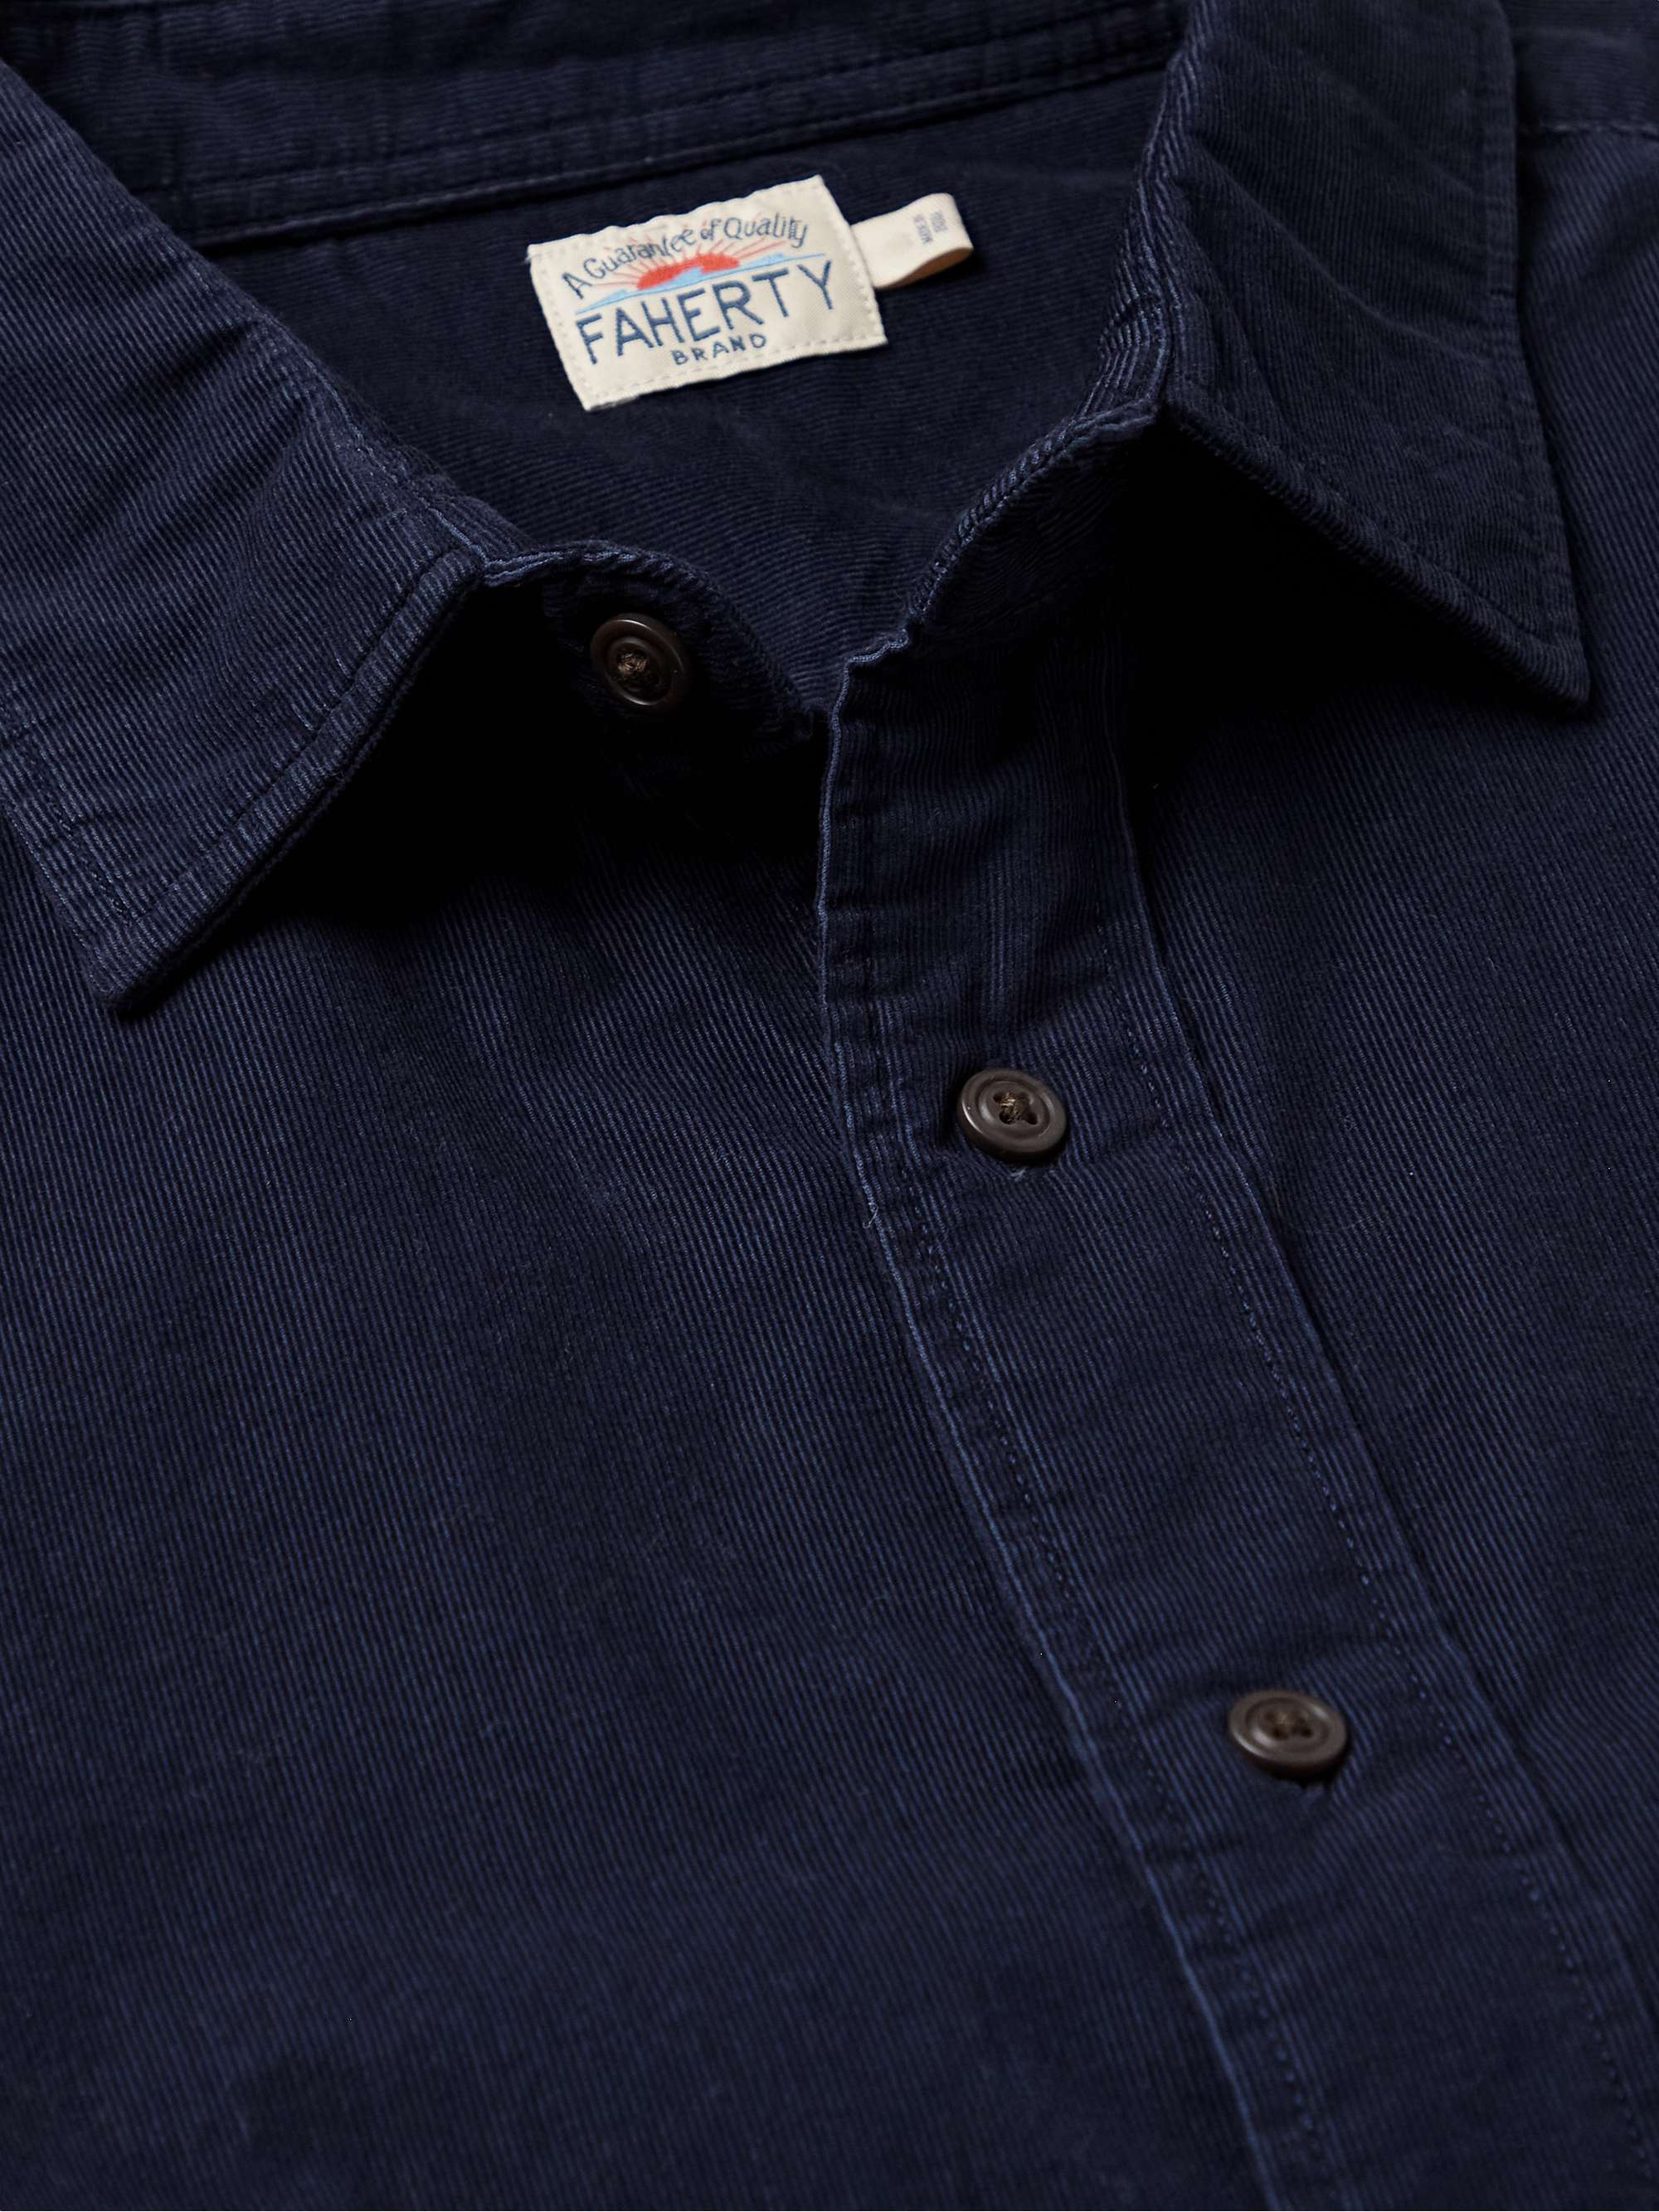 Navy Cotton-Corduroy Shirt | FAHERTY | MR PORTER